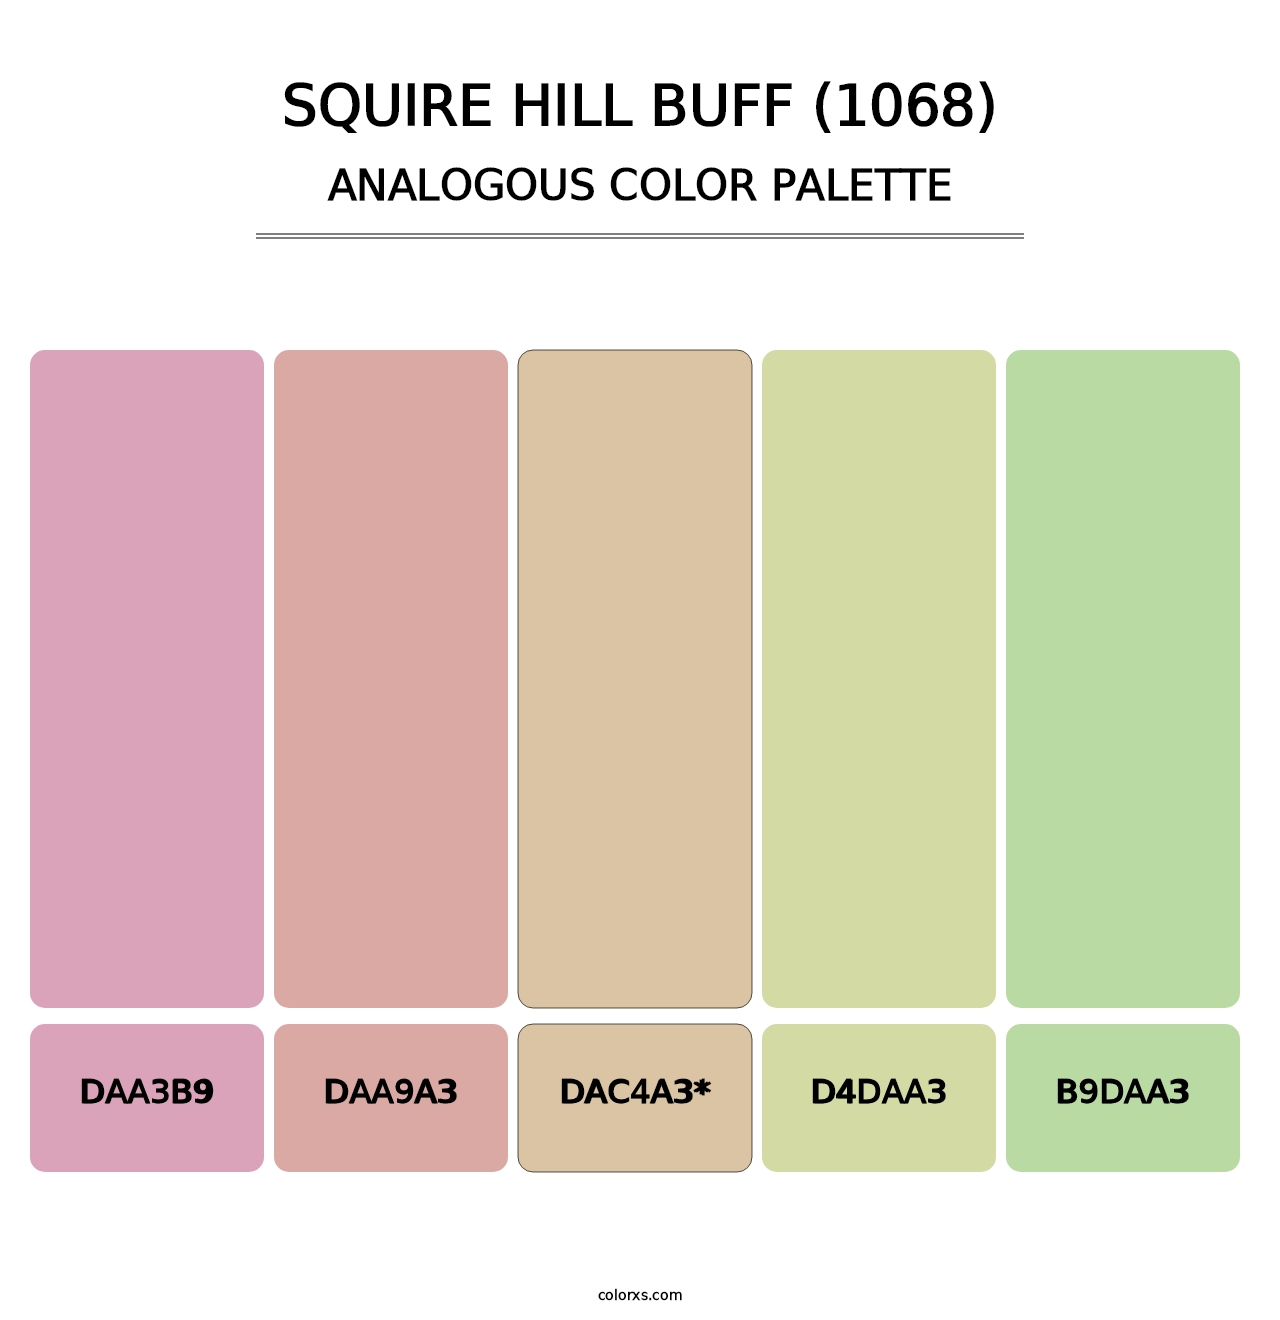 Squire Hill Buff (1068) - Analogous Color Palette